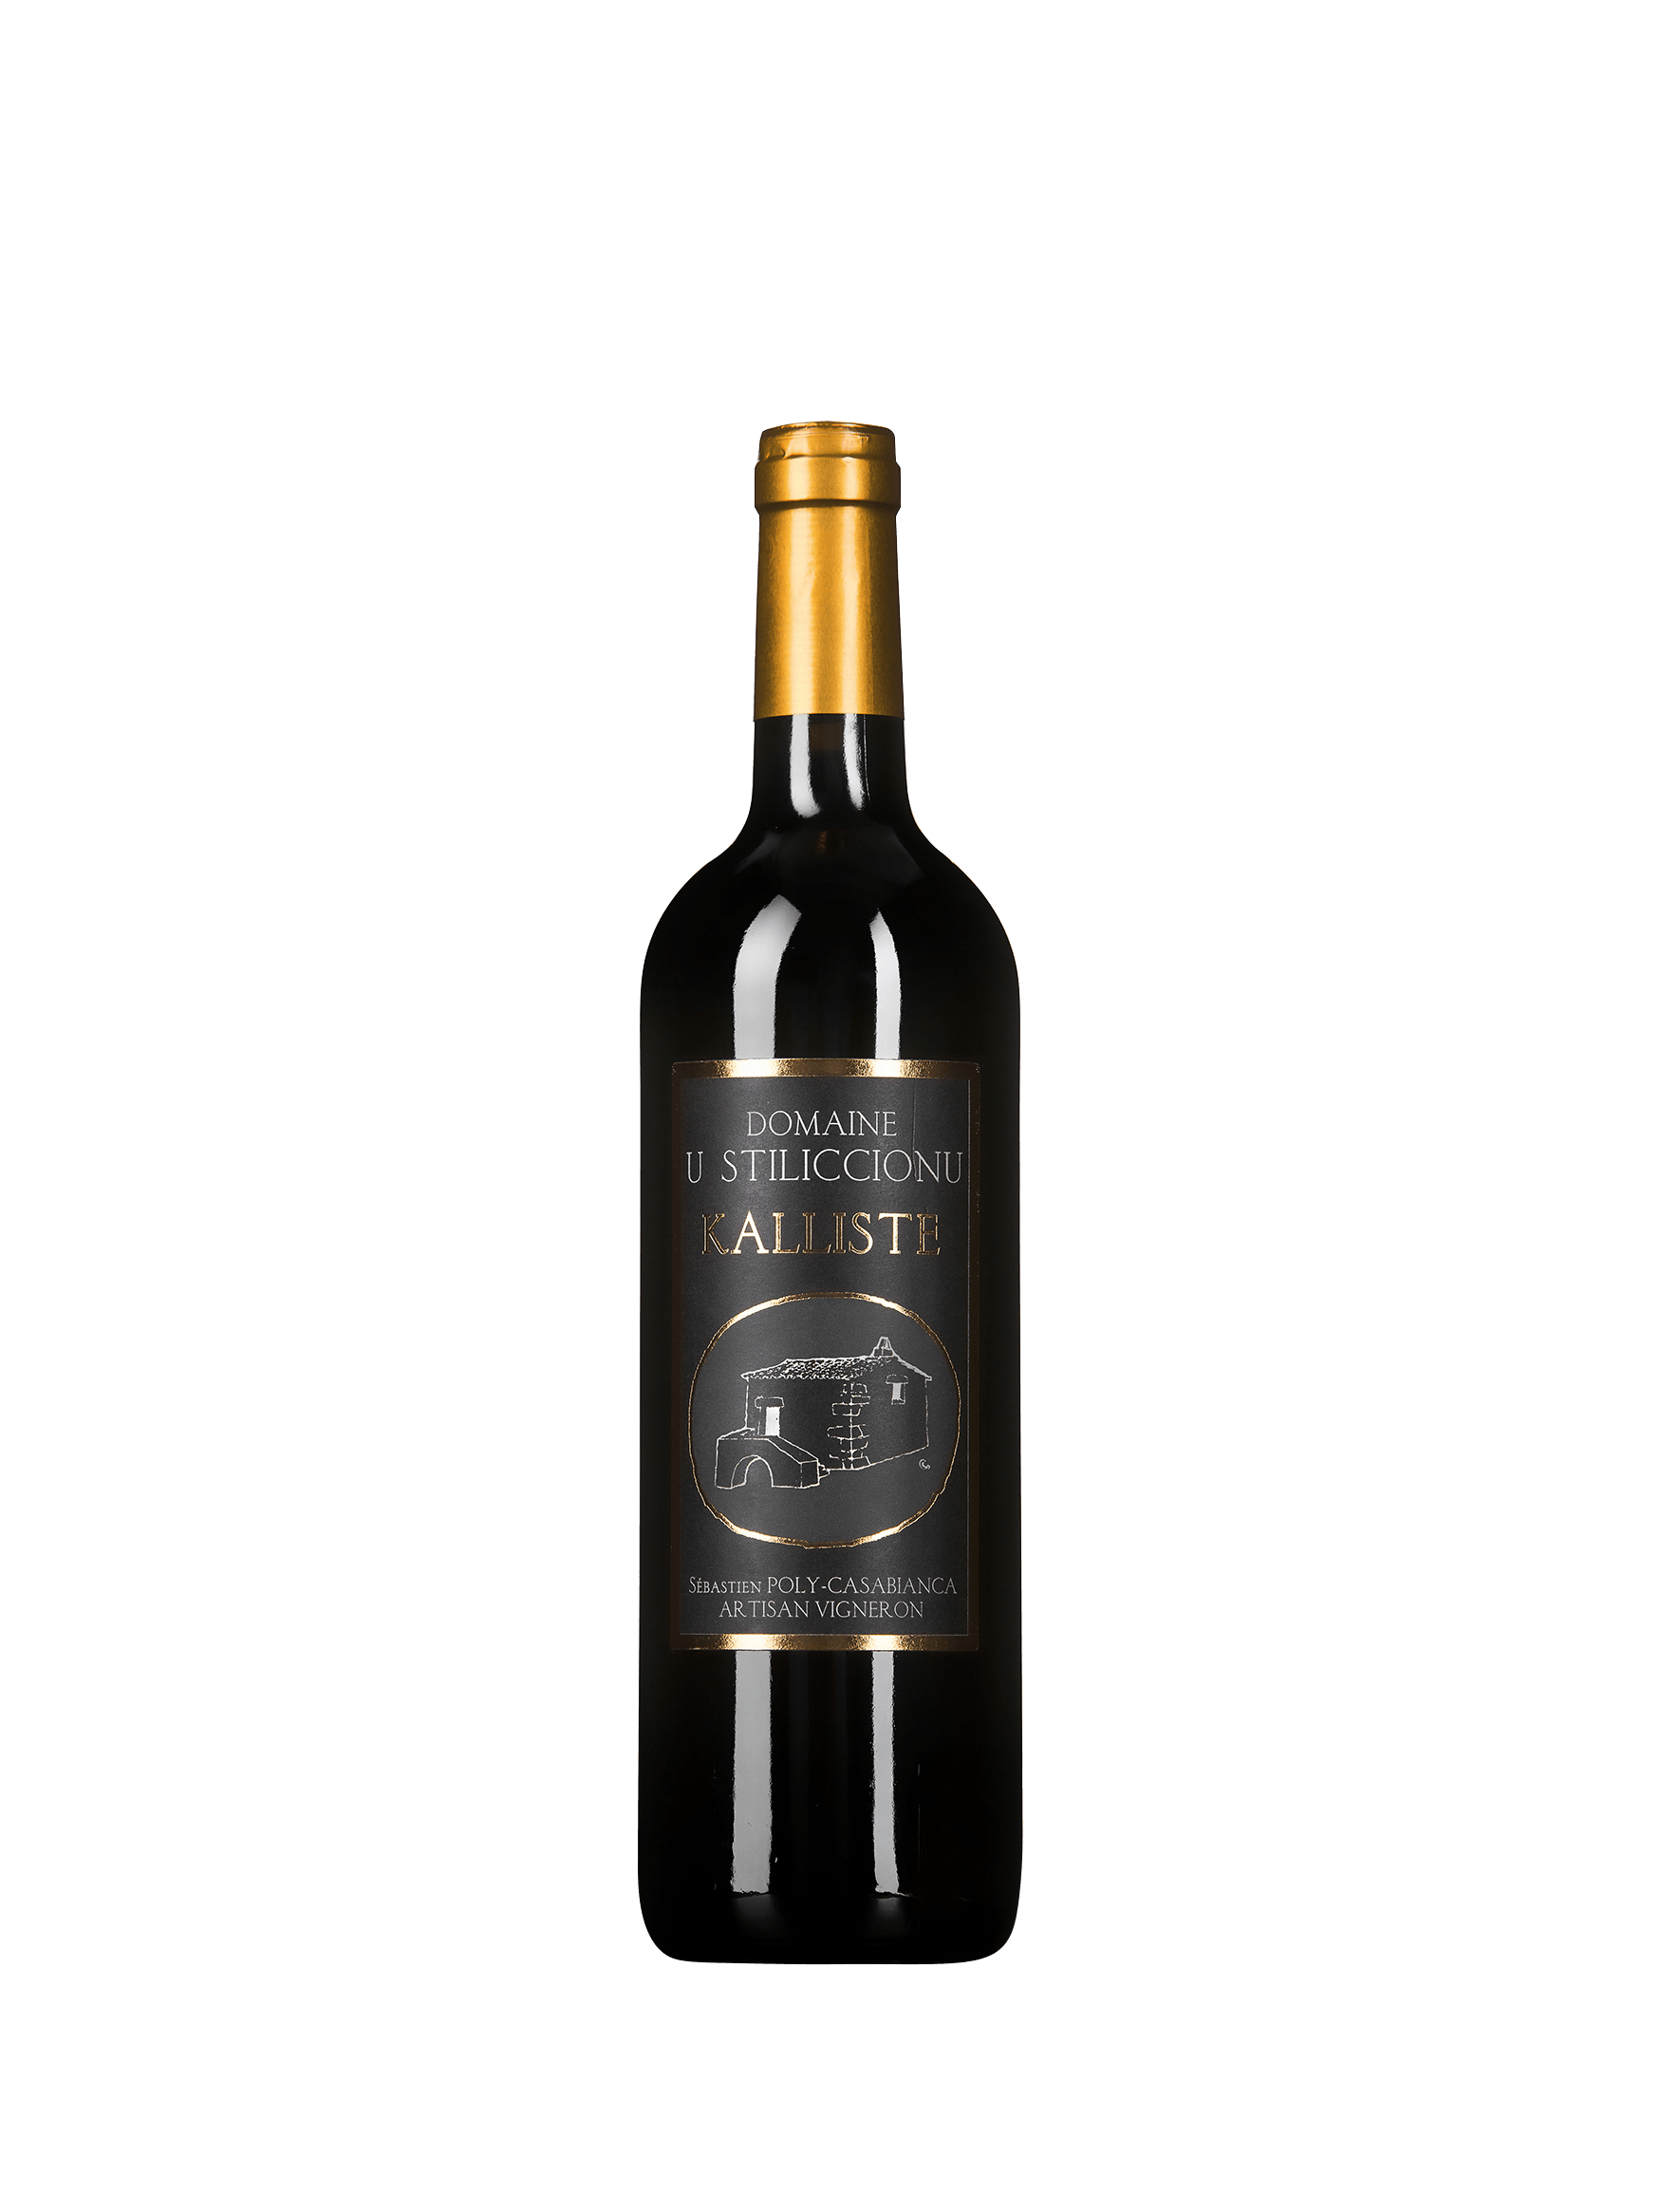 Domaine U Stiliccionu 'Kalliste' Ajaccio, Corsica - Williston Park Wines & Spirits